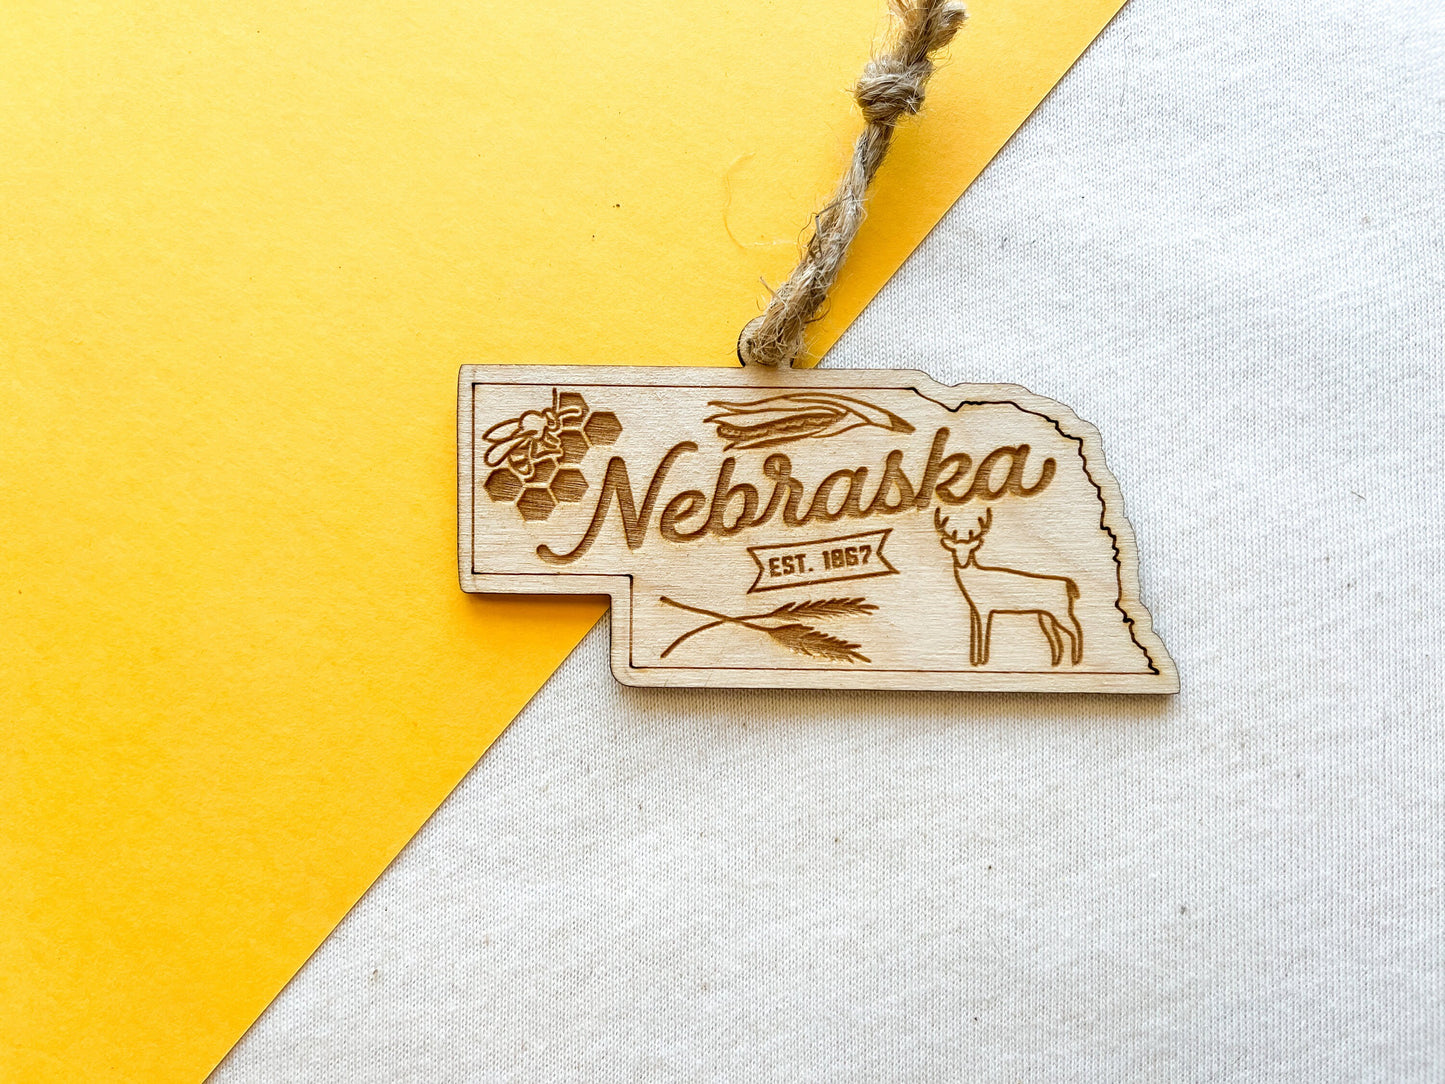 Nebraska Home Town Ornament